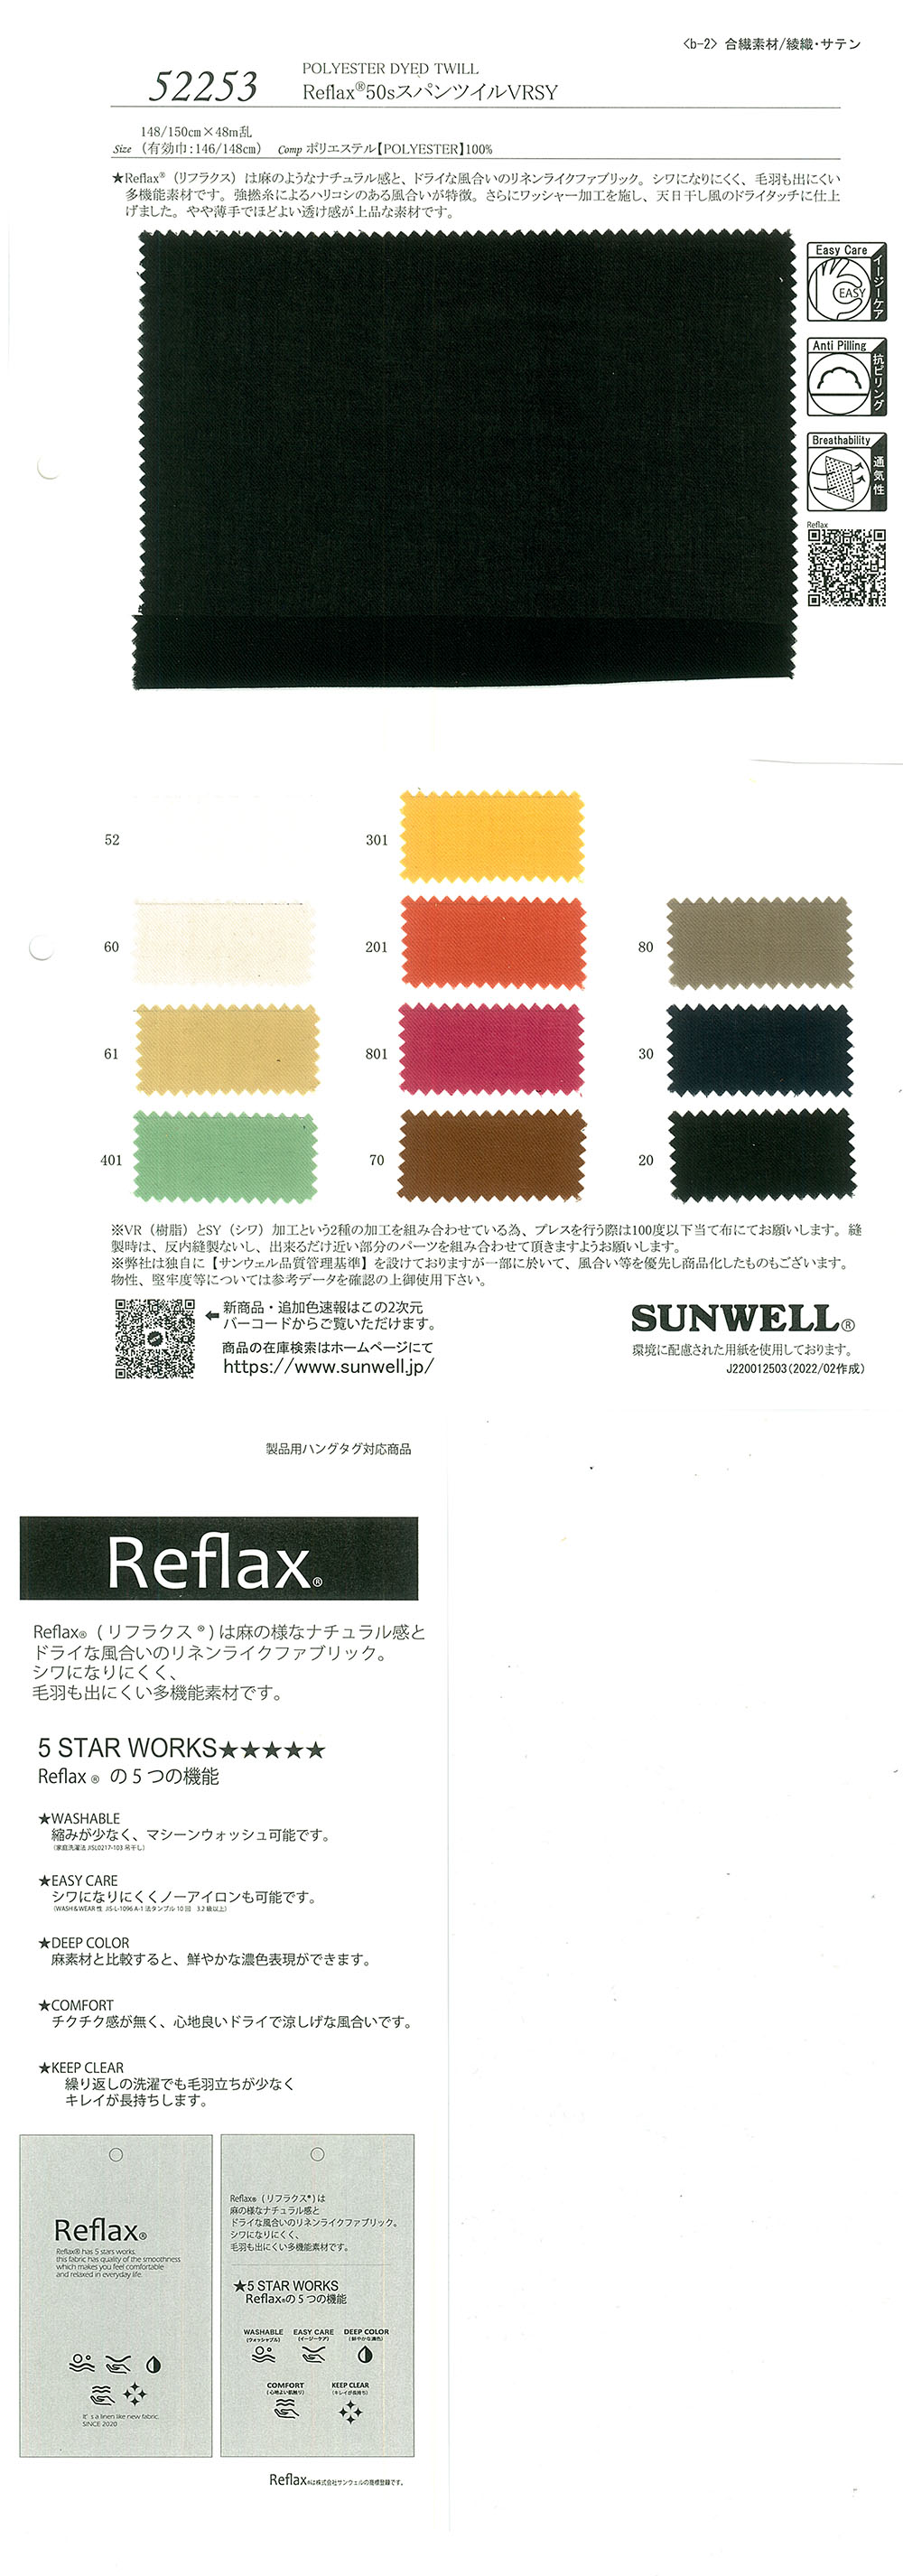 52253 Reflax(R)50 Hilo Para Baldosas Hilado De Un Solo Hilo[Fabrica Textil] SUNWELL